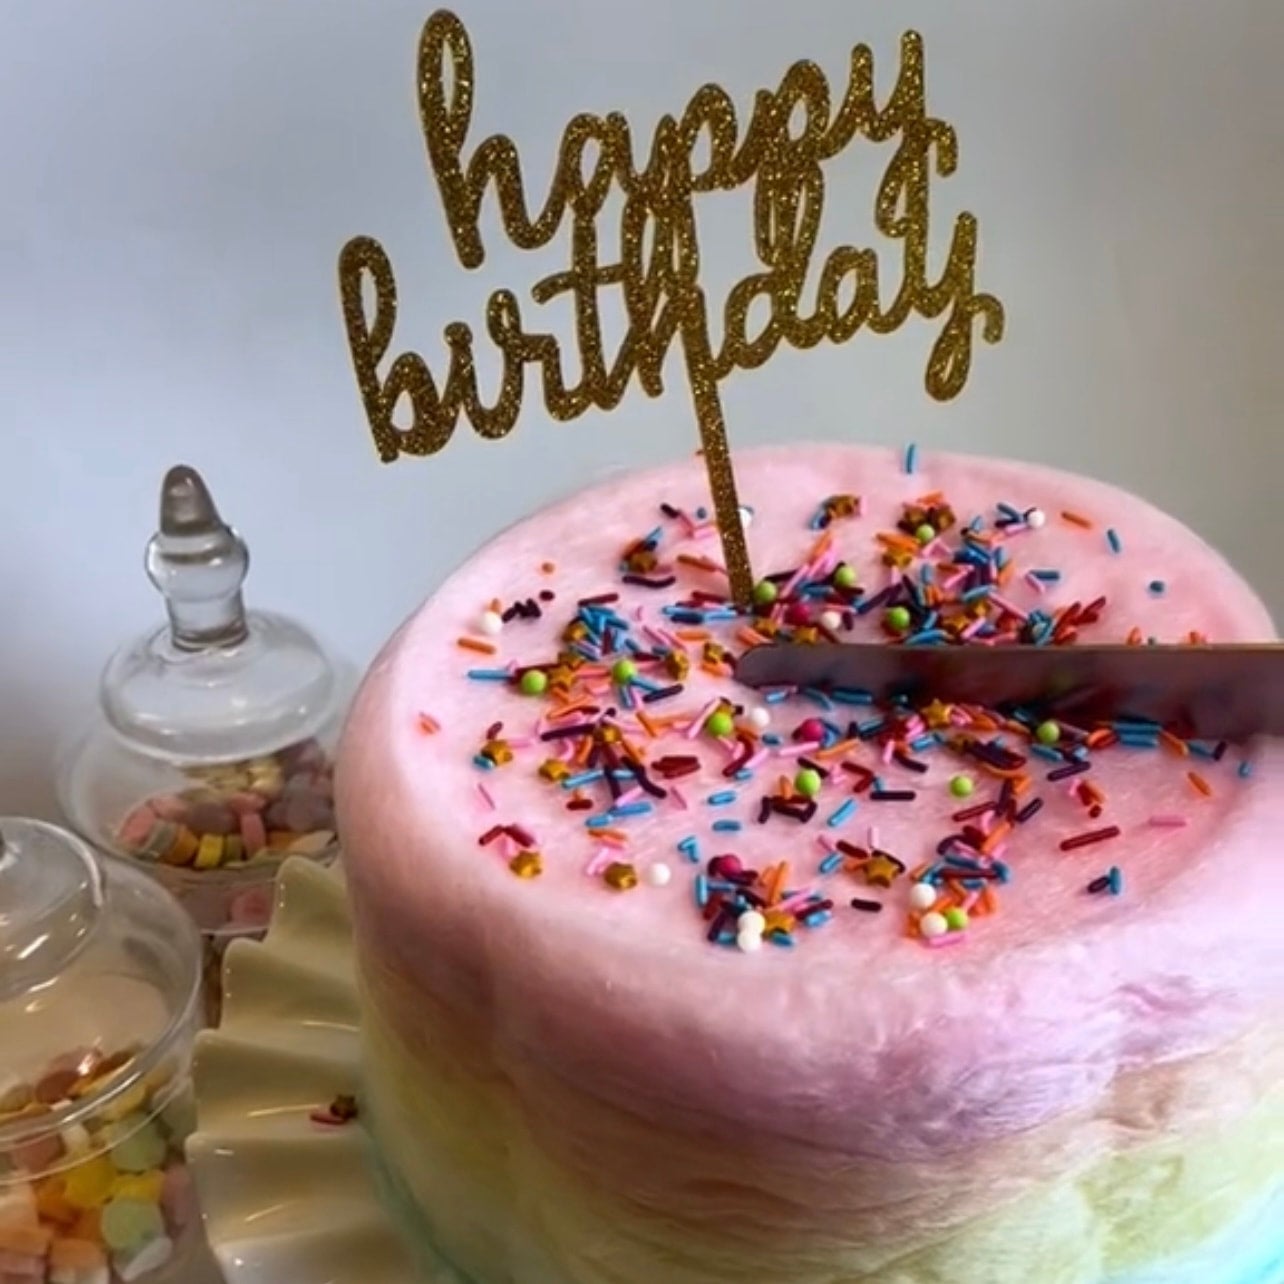 Candy Cake - Best Birthday Cake Recipe Ideas - Ultimate Cake